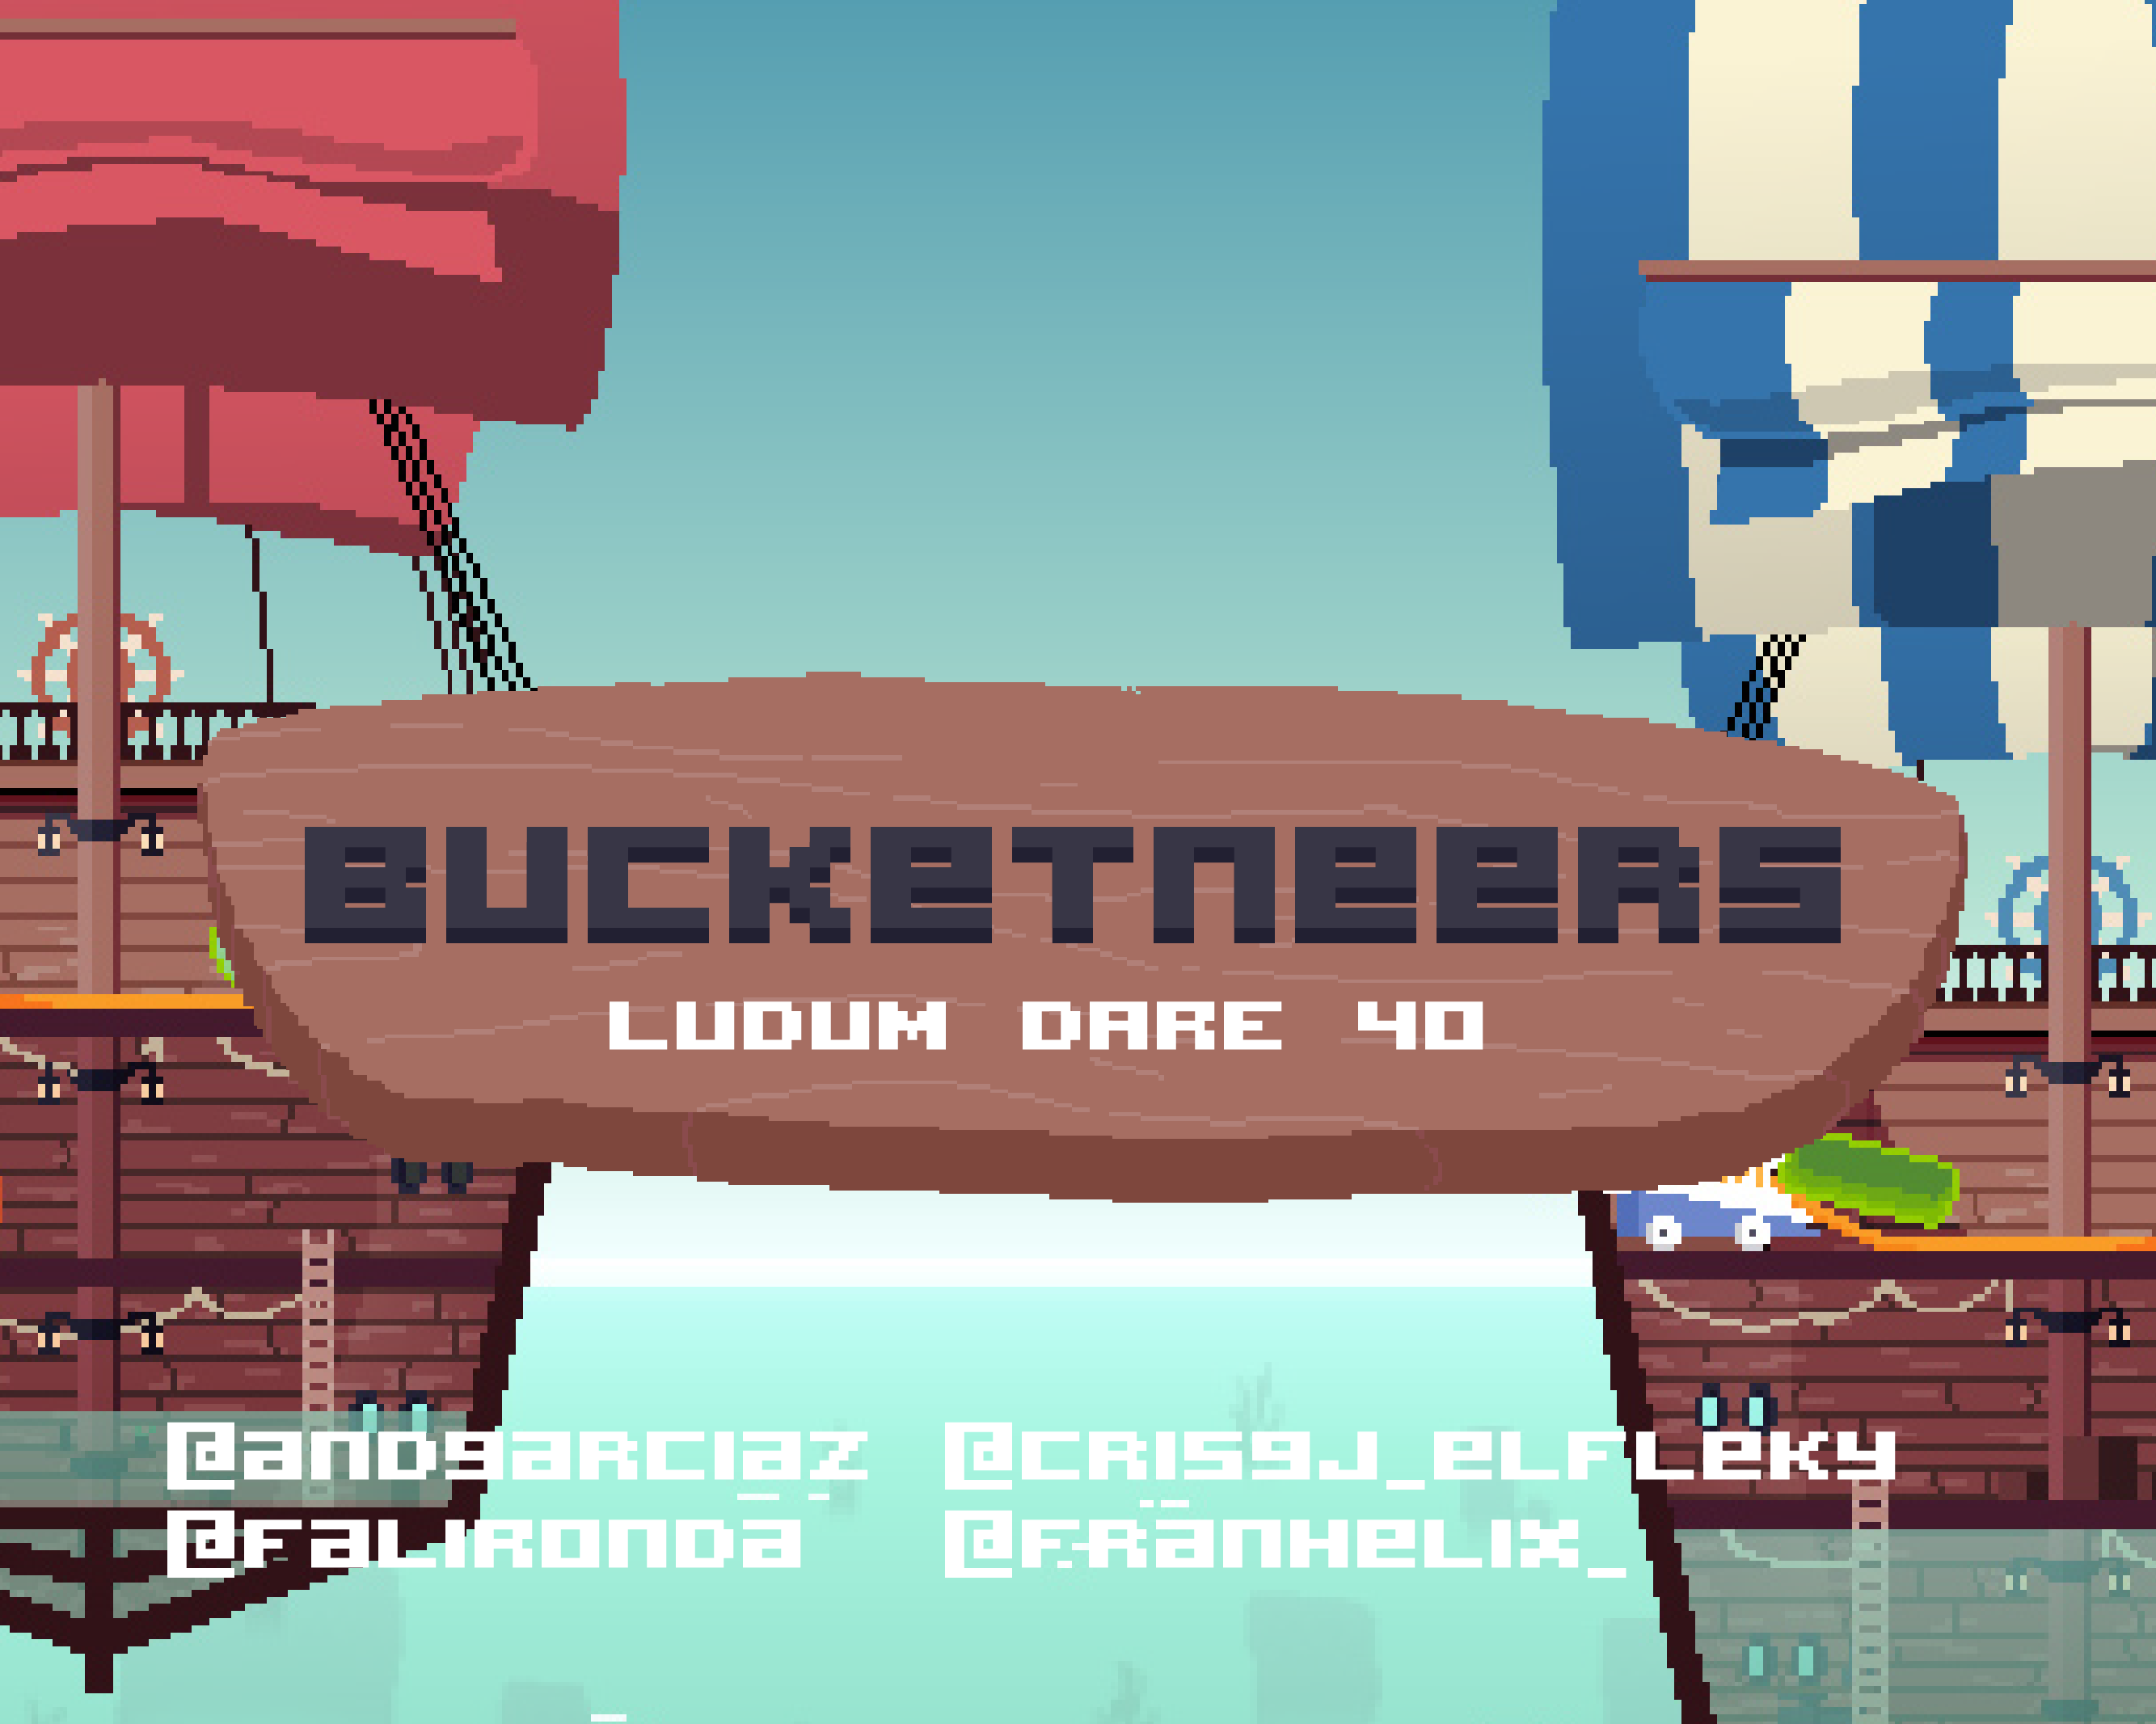 Bucketneers project